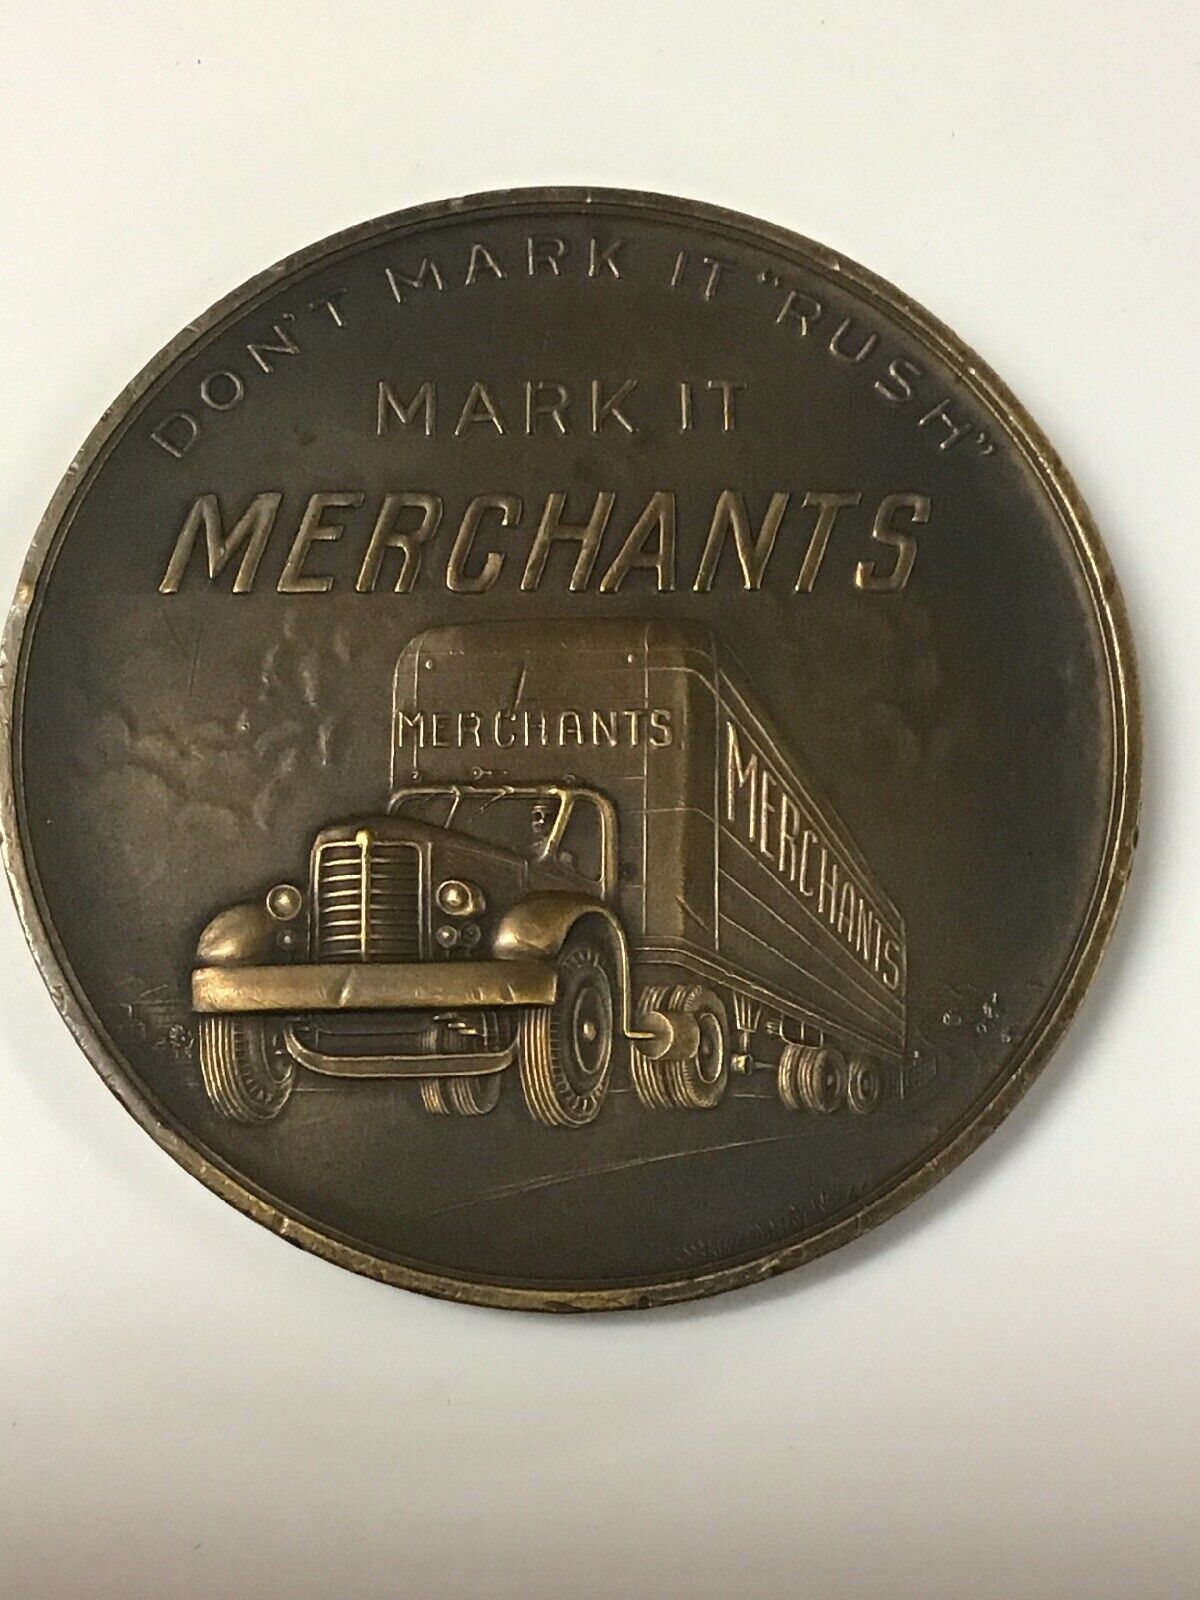 MERCHANTS MOTOR FREIGHT INC. Bronze Medal Don’t Mark It “Rush” Mark It Merchants